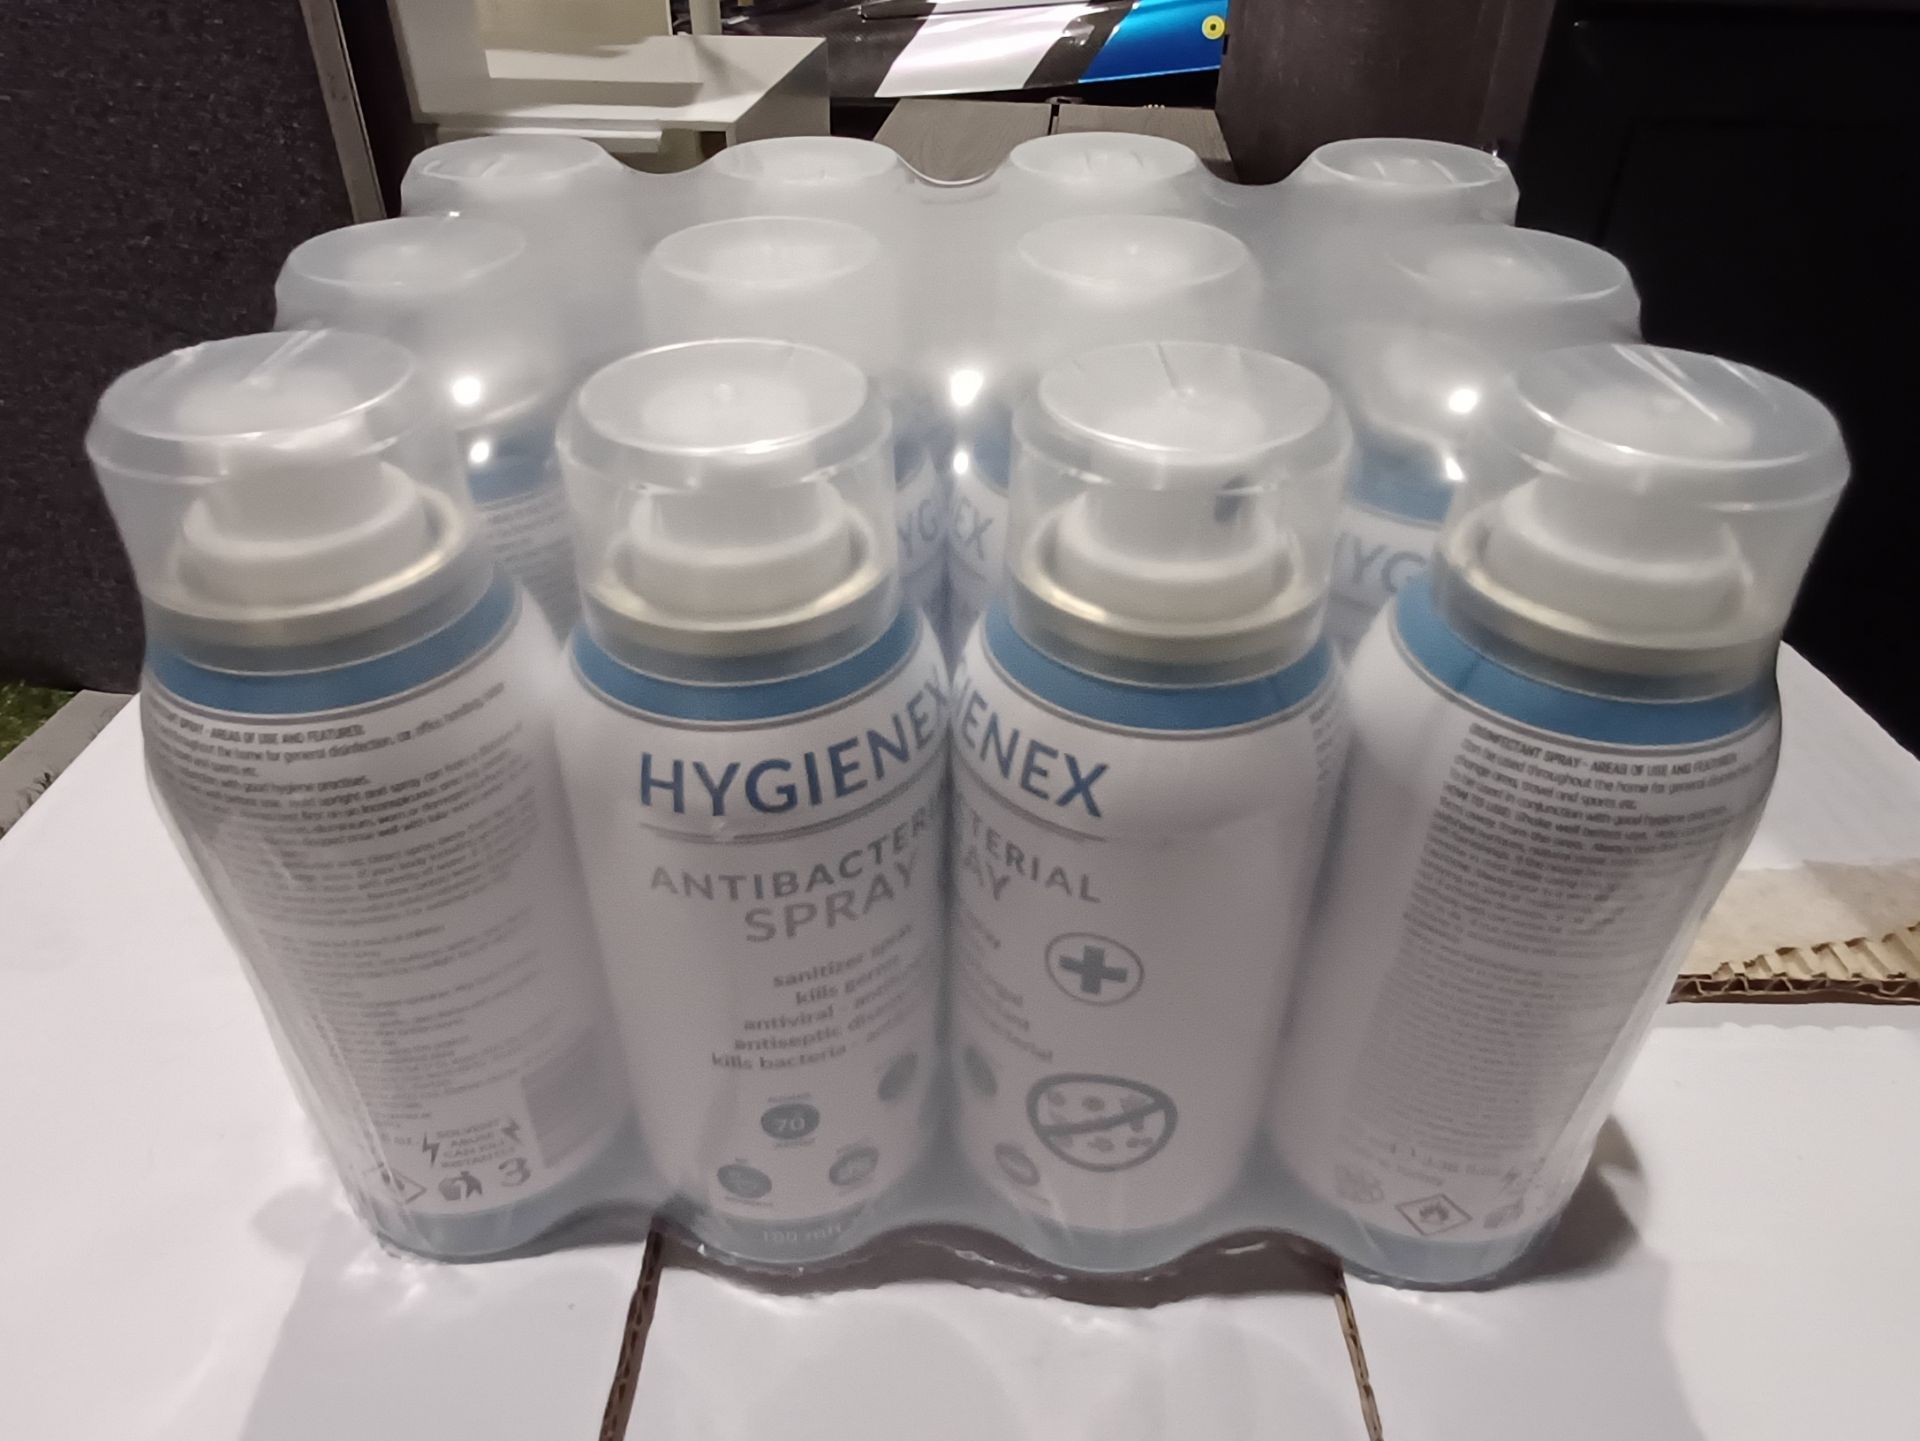 5 Boxes of Hygienex antibacterial spray